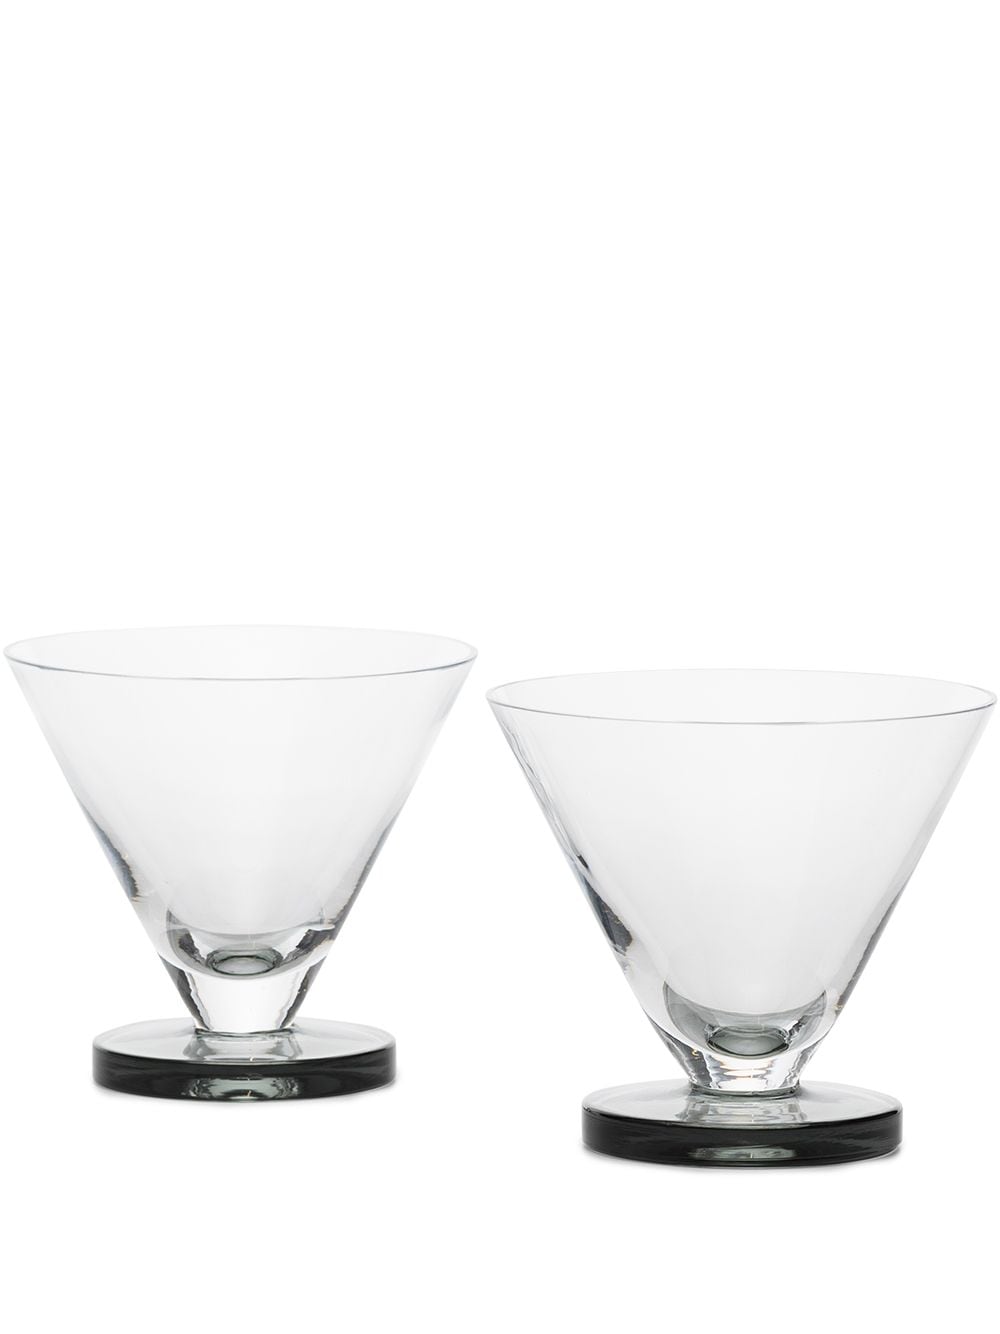 Tom Dixon Cocktail glasses set of two - Neutrals von Tom Dixon